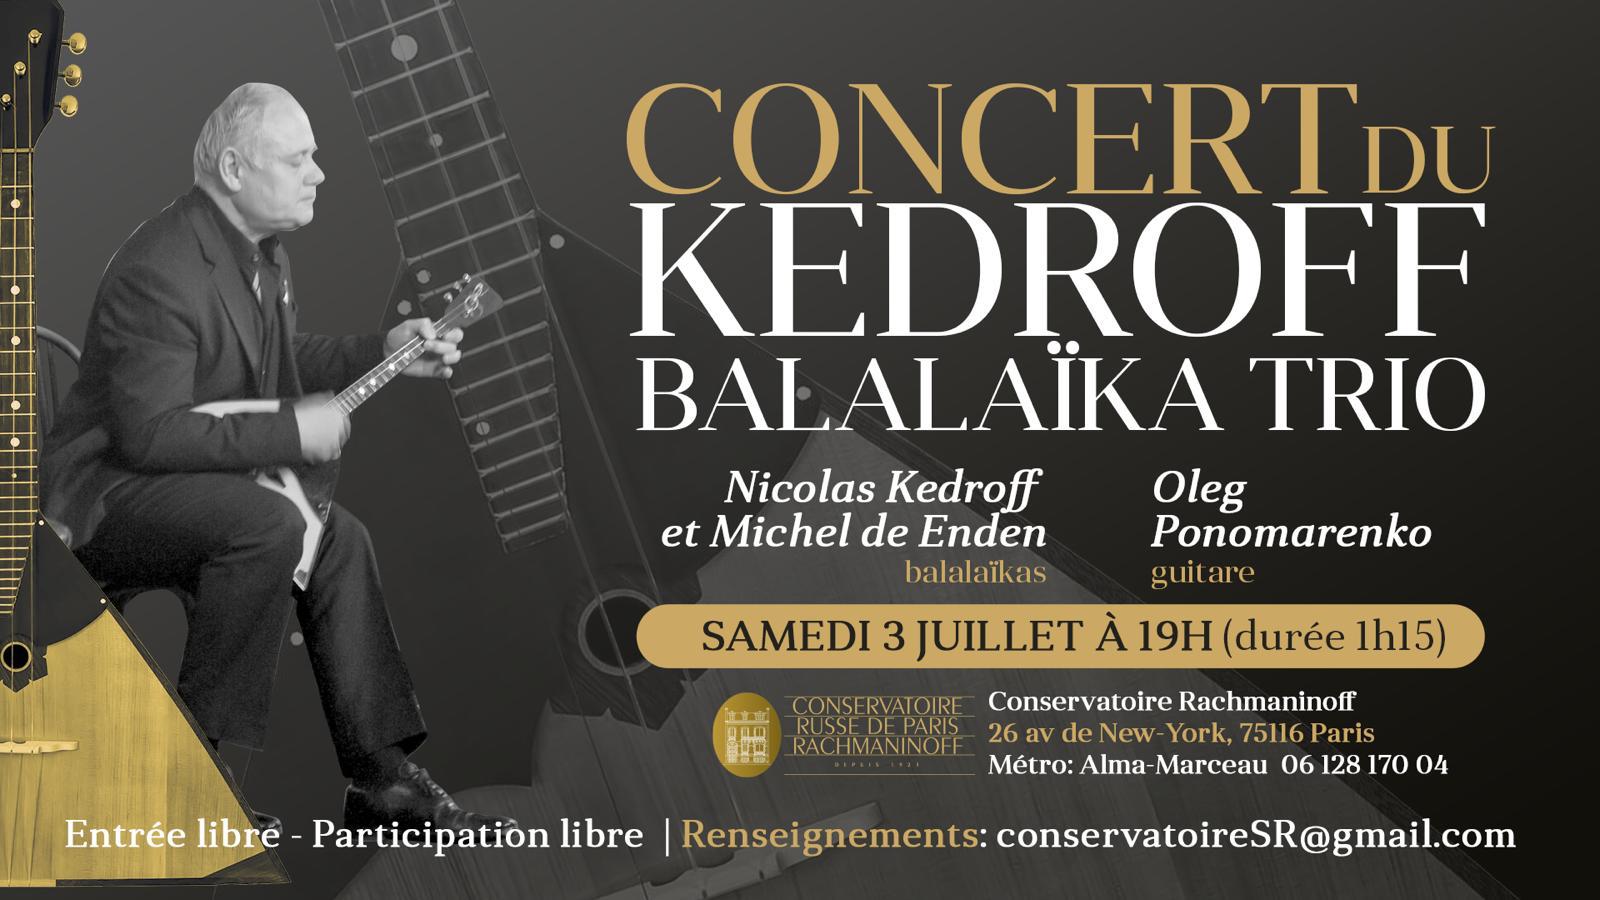 Affiche. Conservatoire Rachmaninoff. Concert du Kedroff balalaïka trio. 2021-07-03